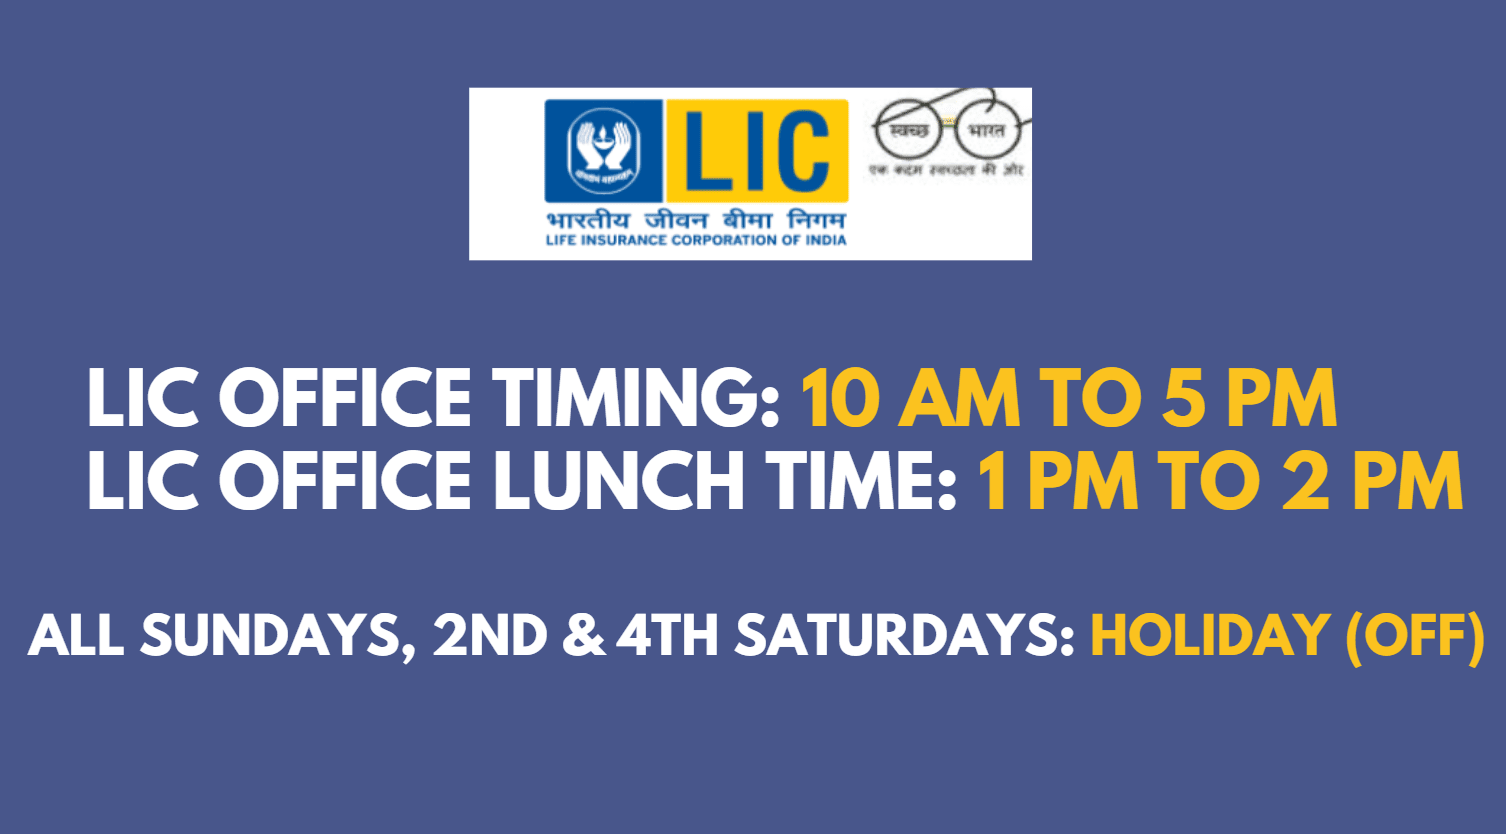 lic office timings